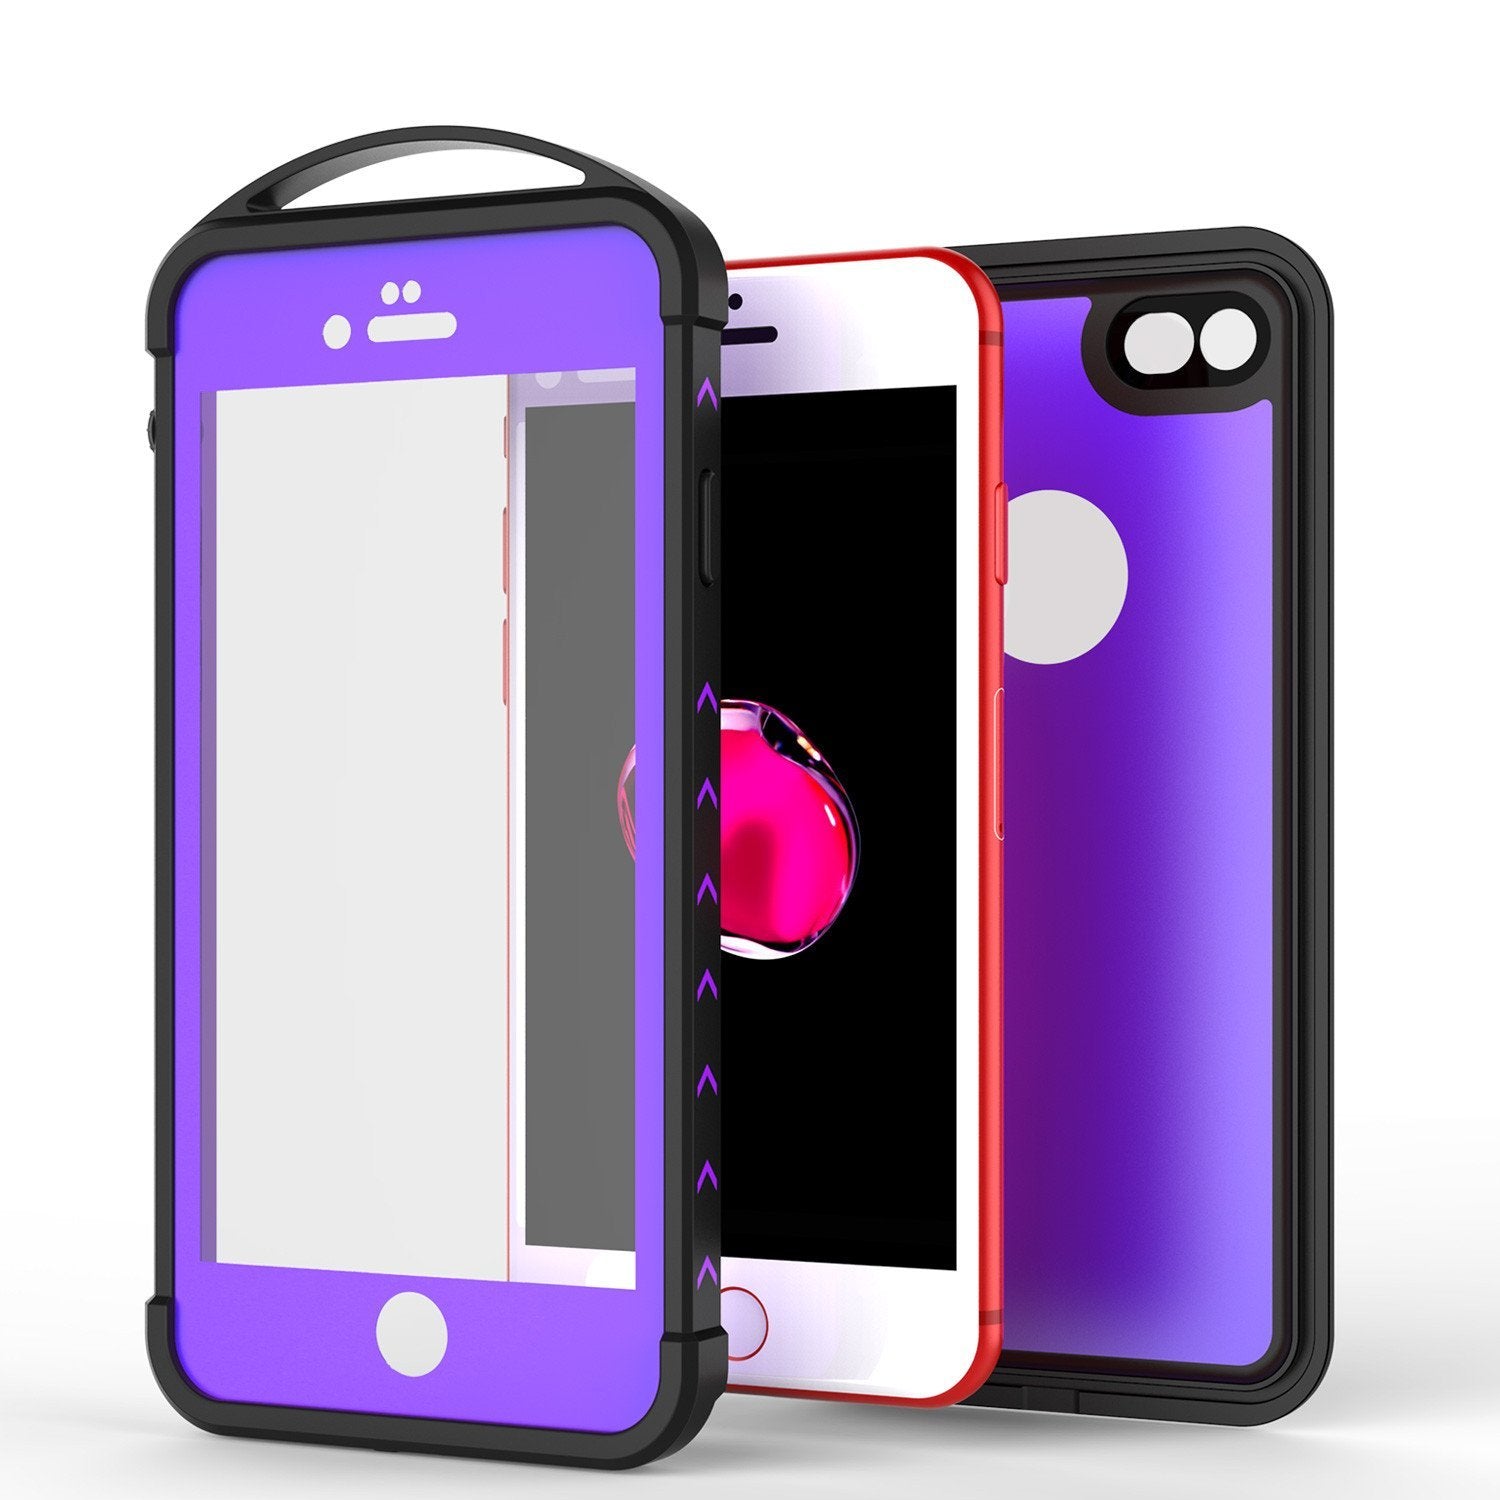 iPhone 8 Waterproof Case, Punkcase ALPINE Series, Purple | Heavy Duty Armor Cover